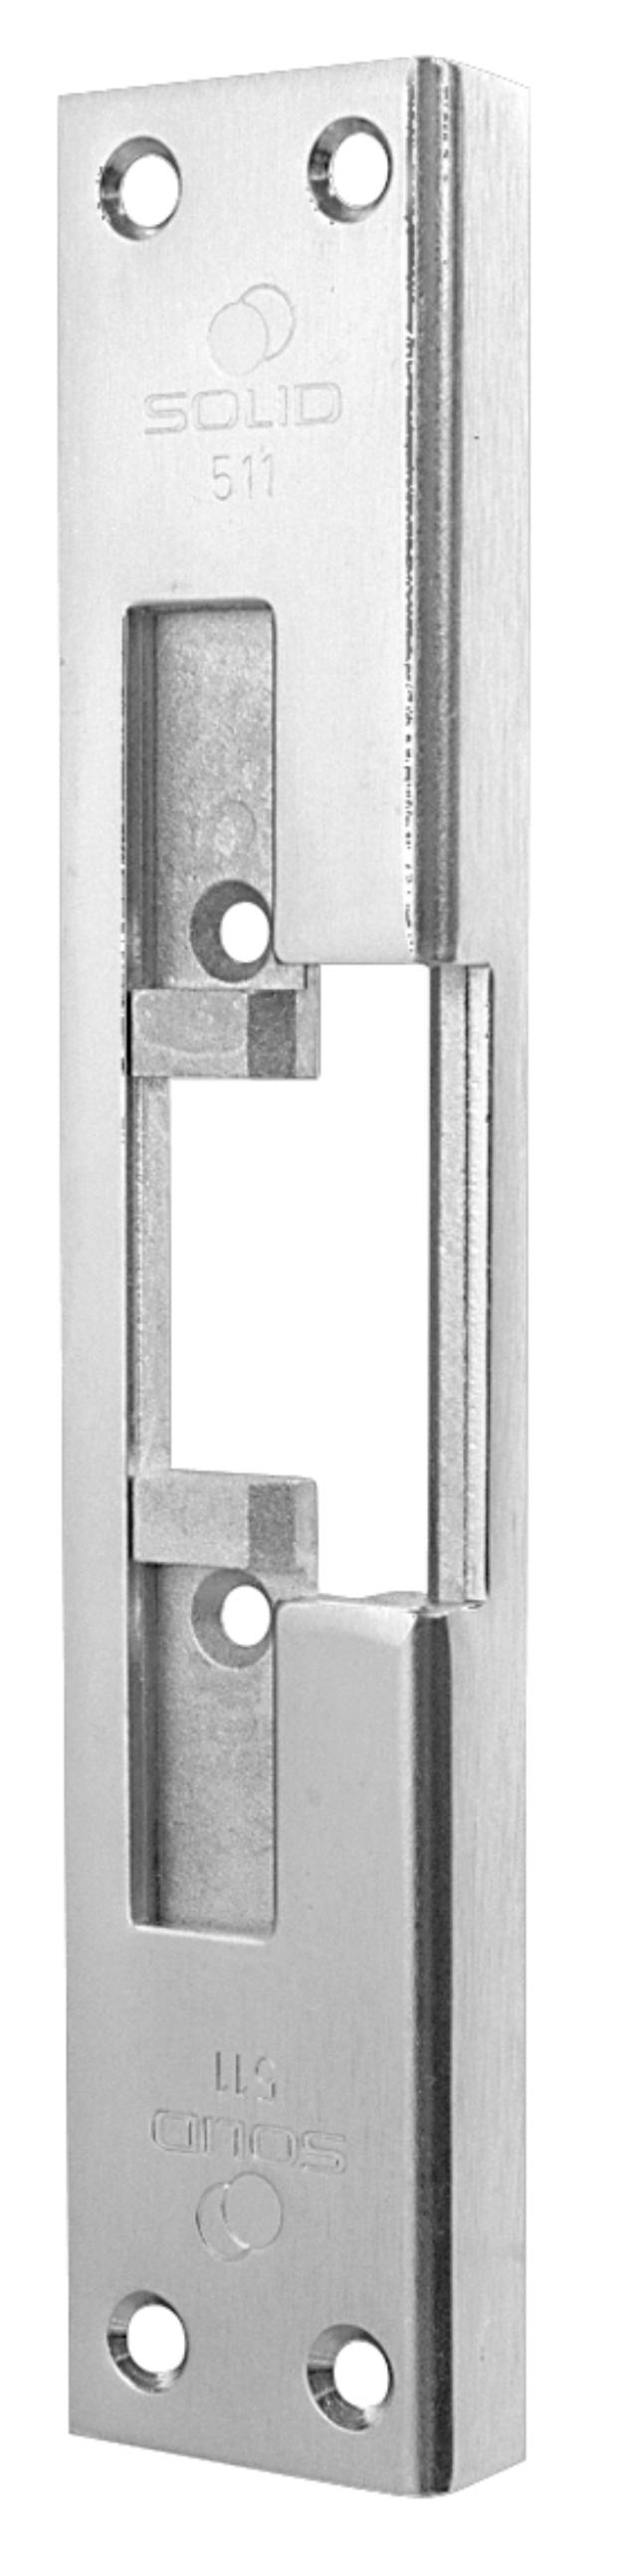 Solid stolpe 511 t/el-slutblik (971237)